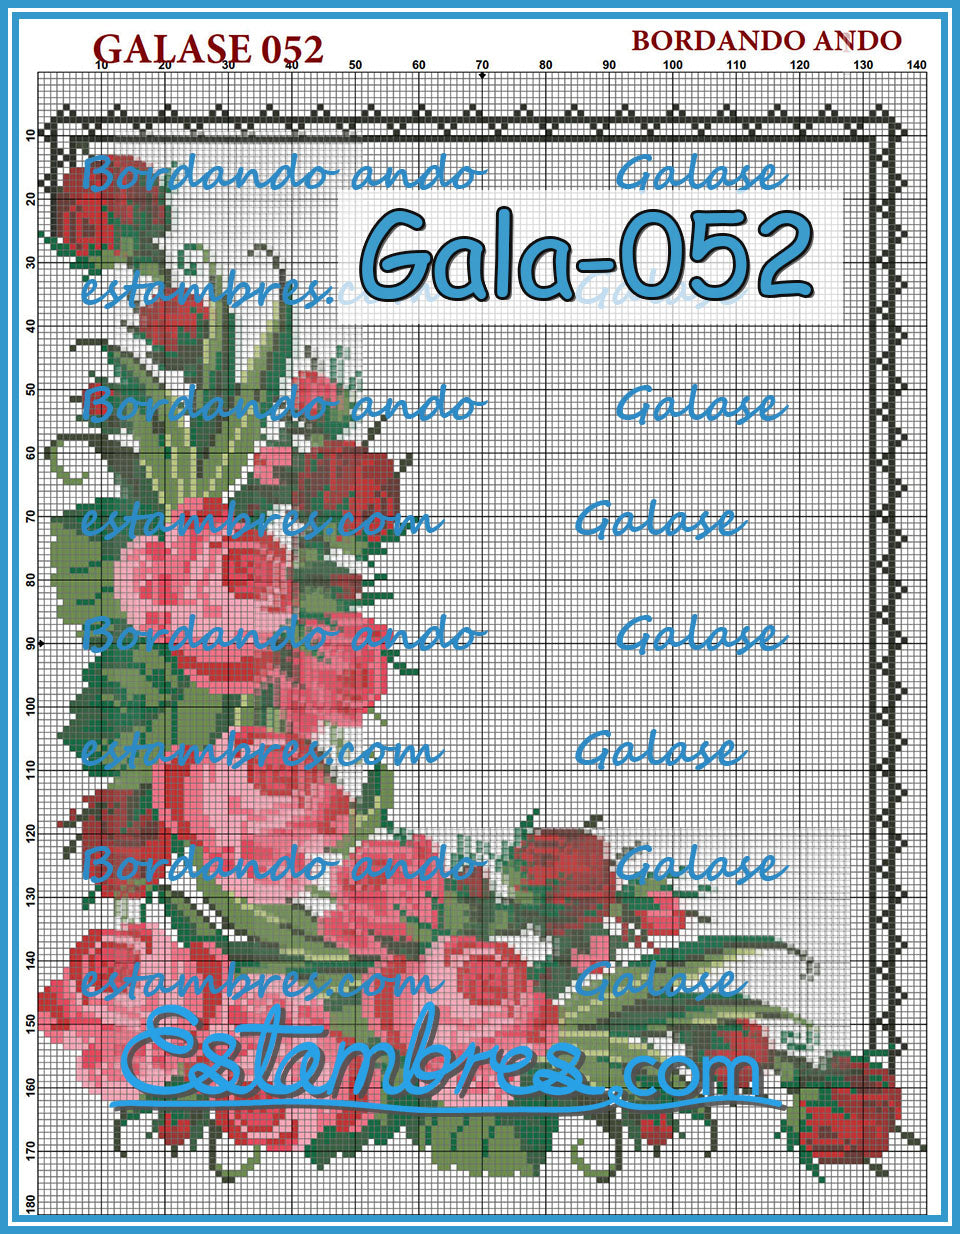 GALASE [001-070] - 1 de 5